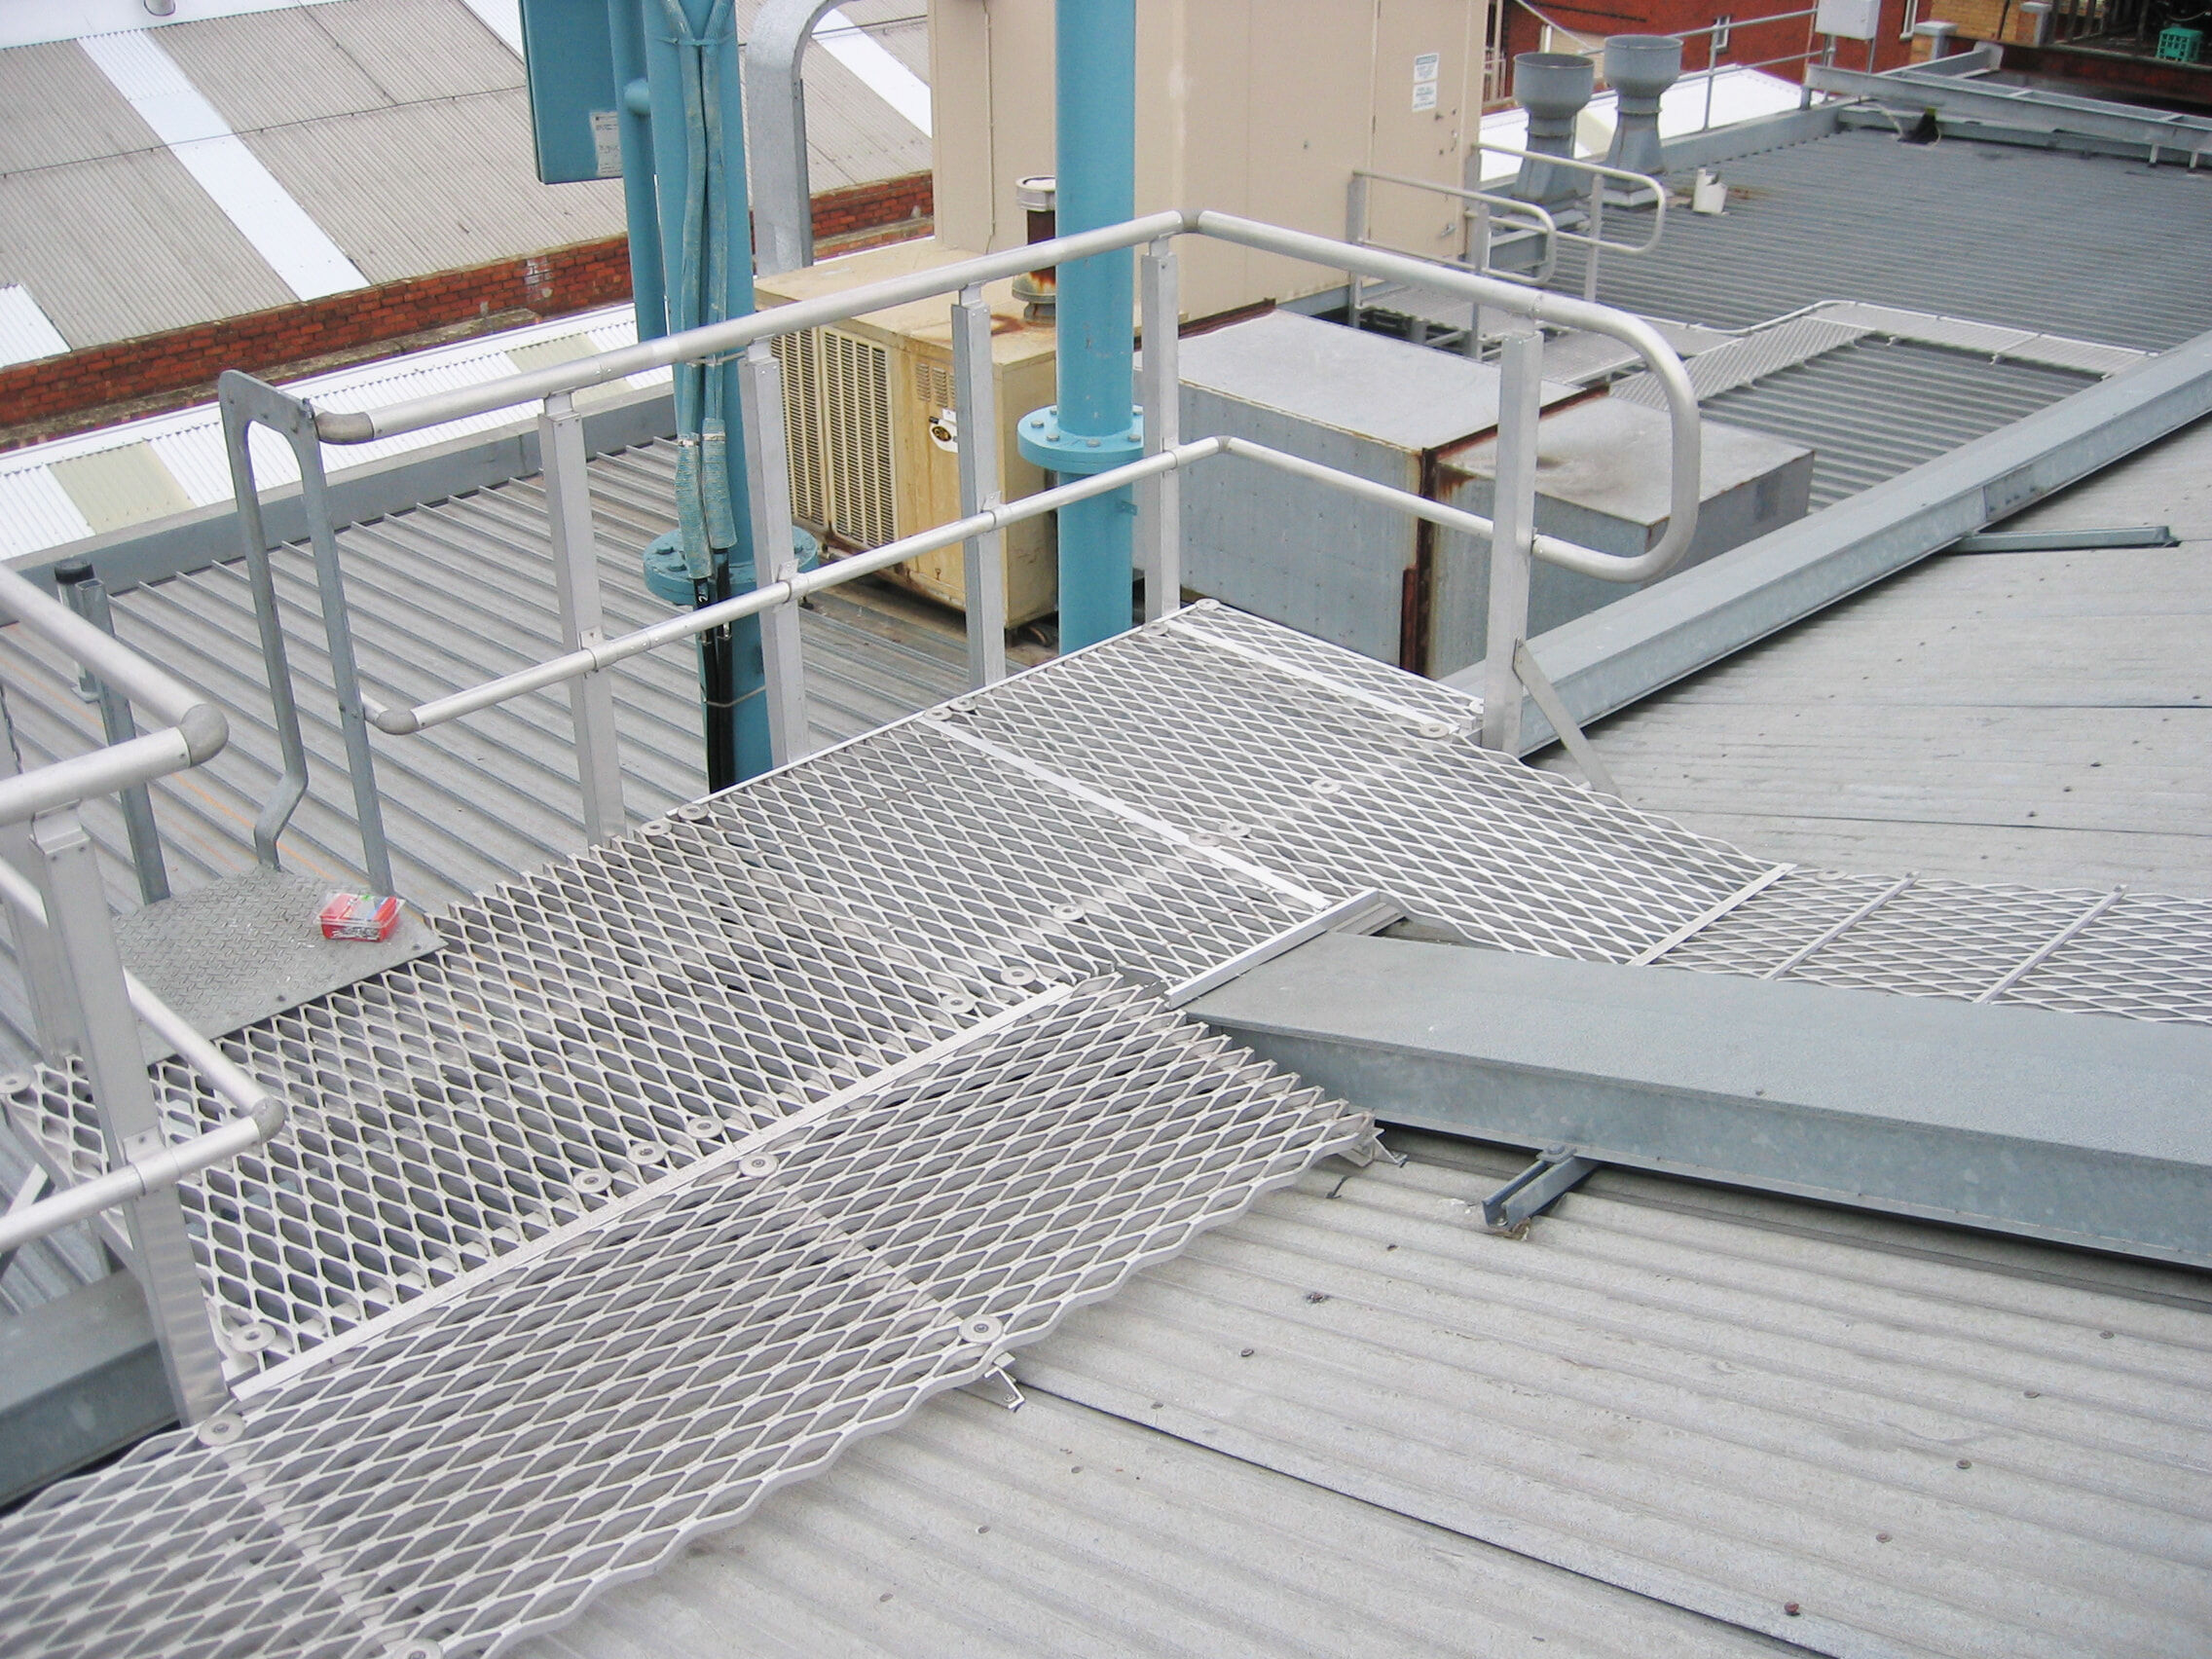 Roof access platform